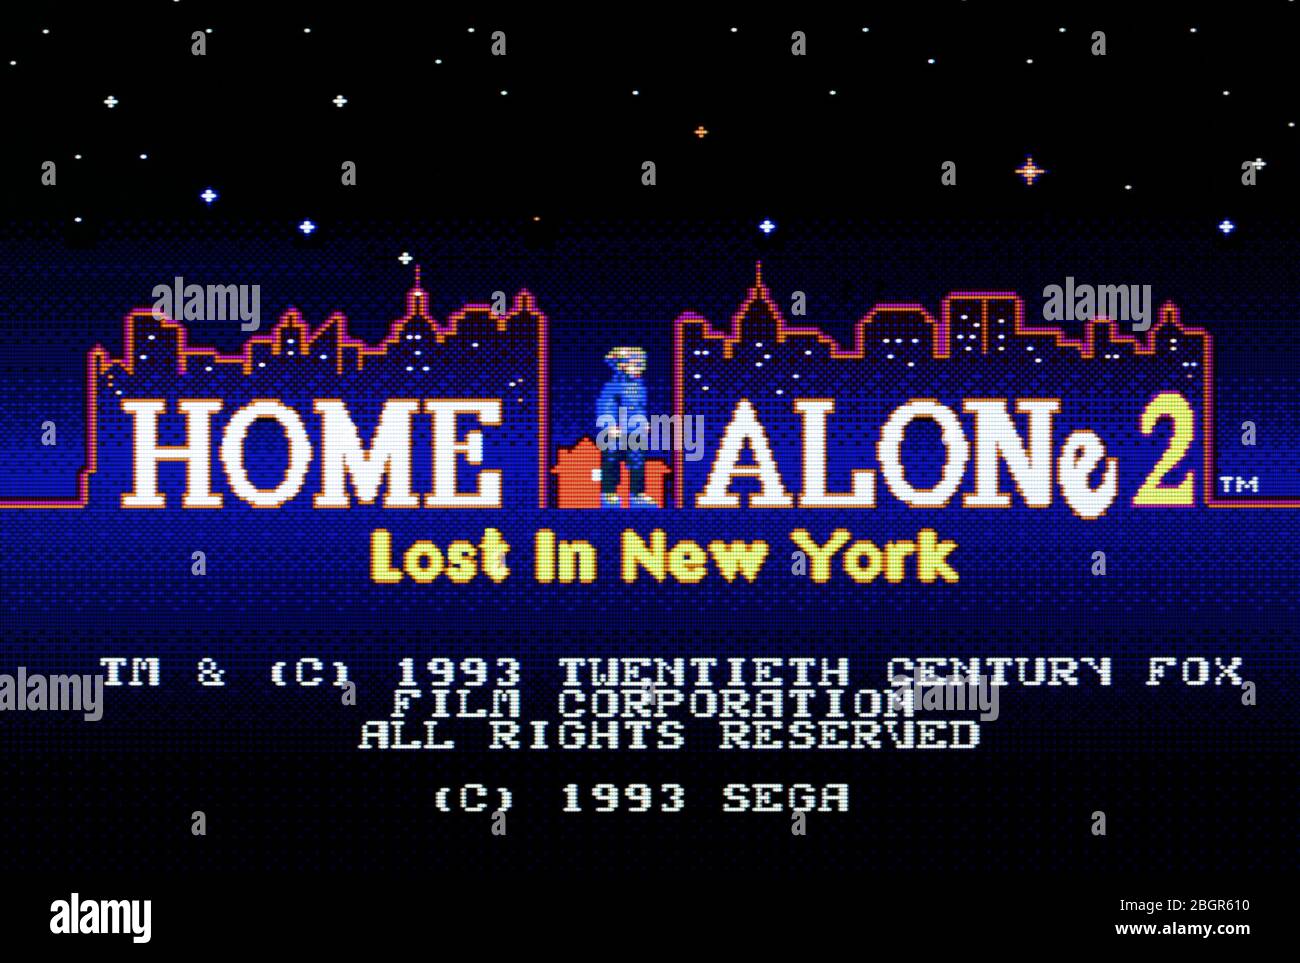 Игра один дома 2. Home Alone 2 игра. Home Alone 2 Lost in New York Sega. Игра один дома 2 сега. Home Alone 2: Lost in New York (игра).